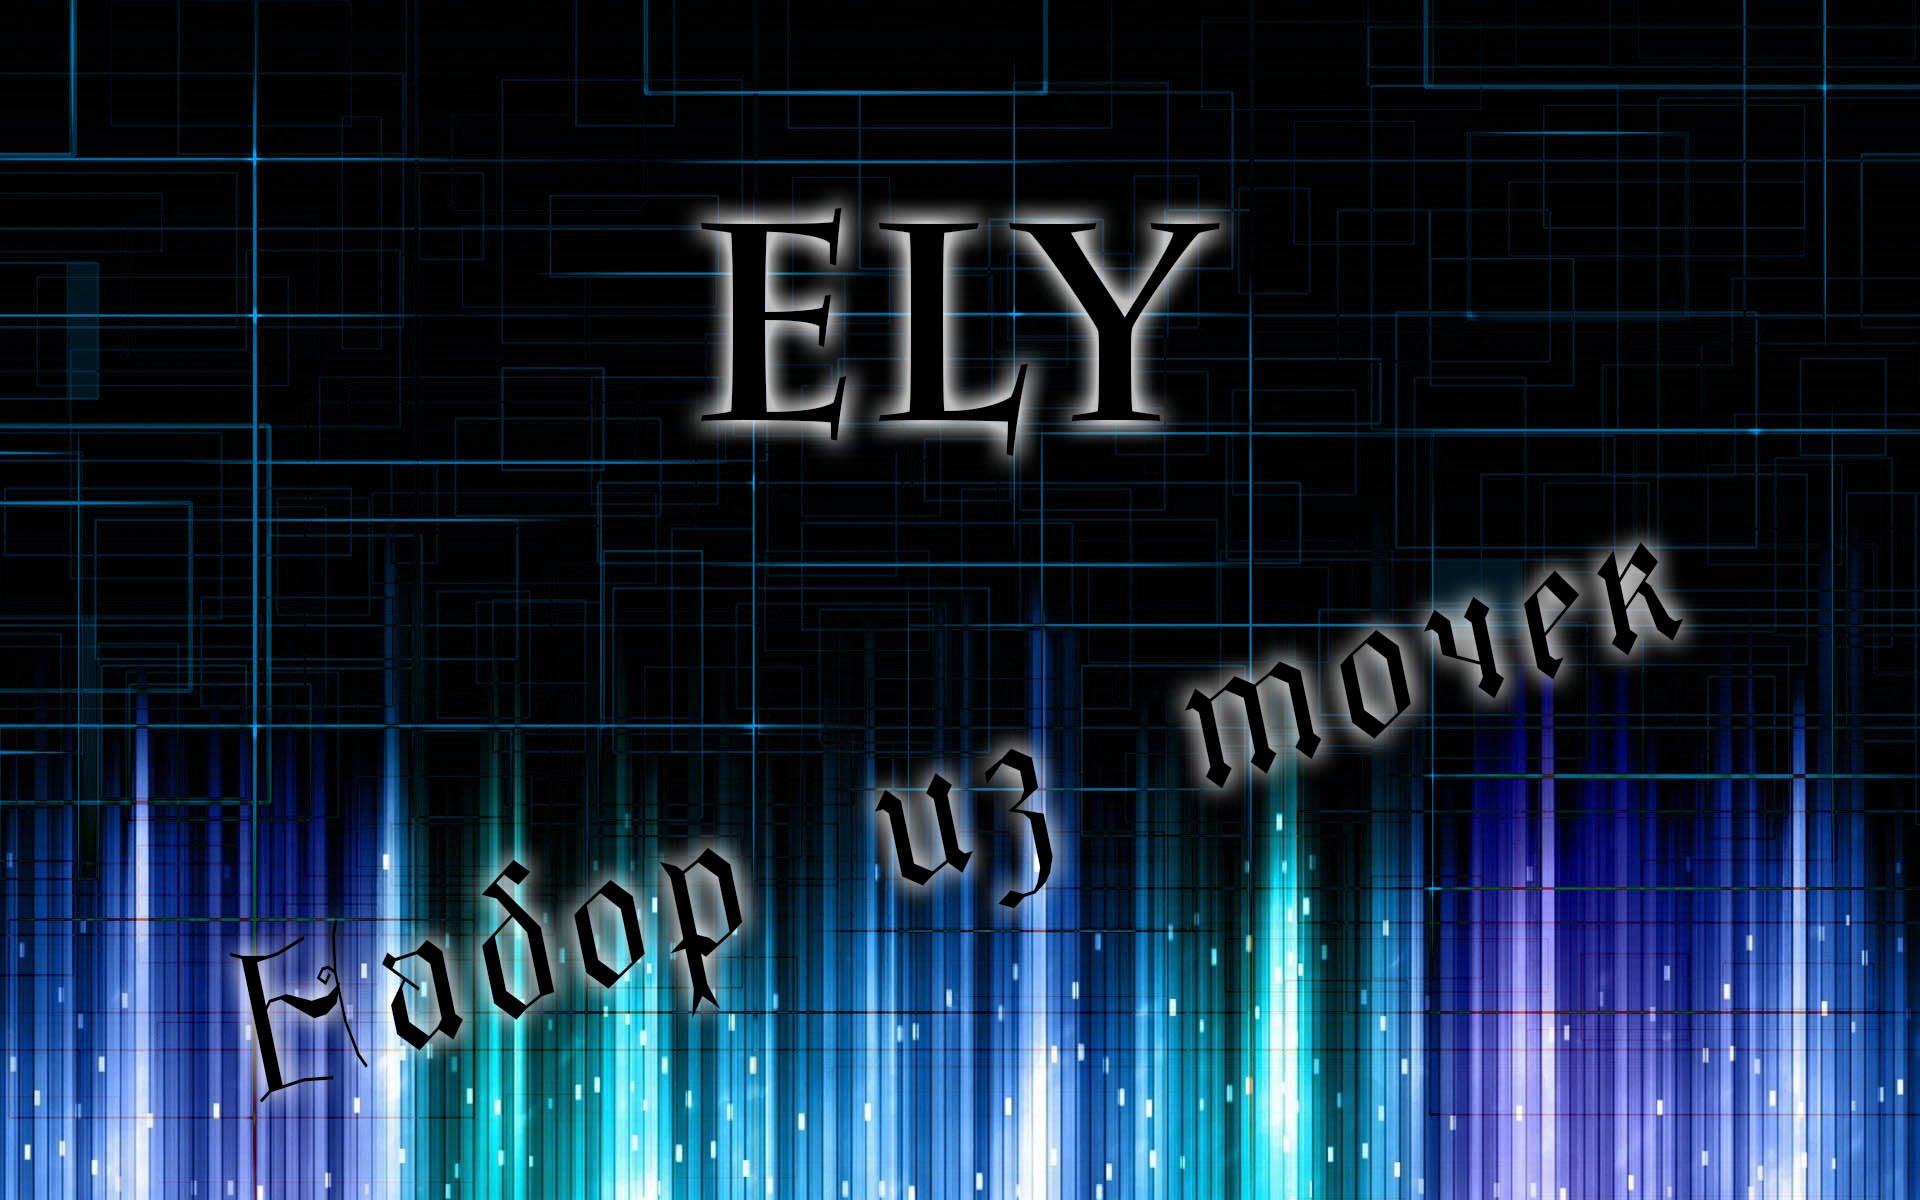 Ely - Набор из точек